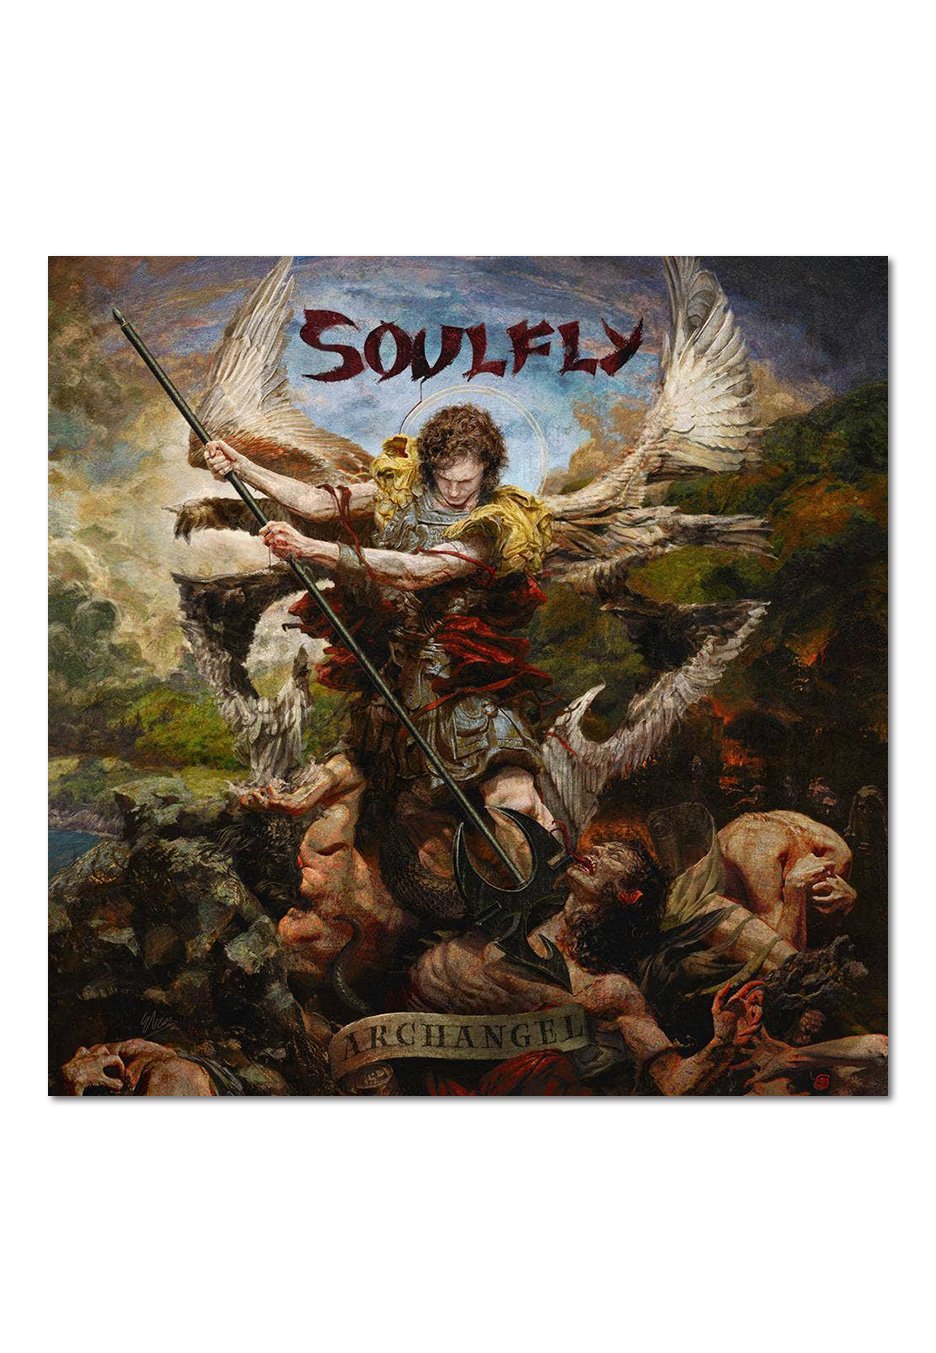 Soulfly - Archangel - Digipak CD + DVD